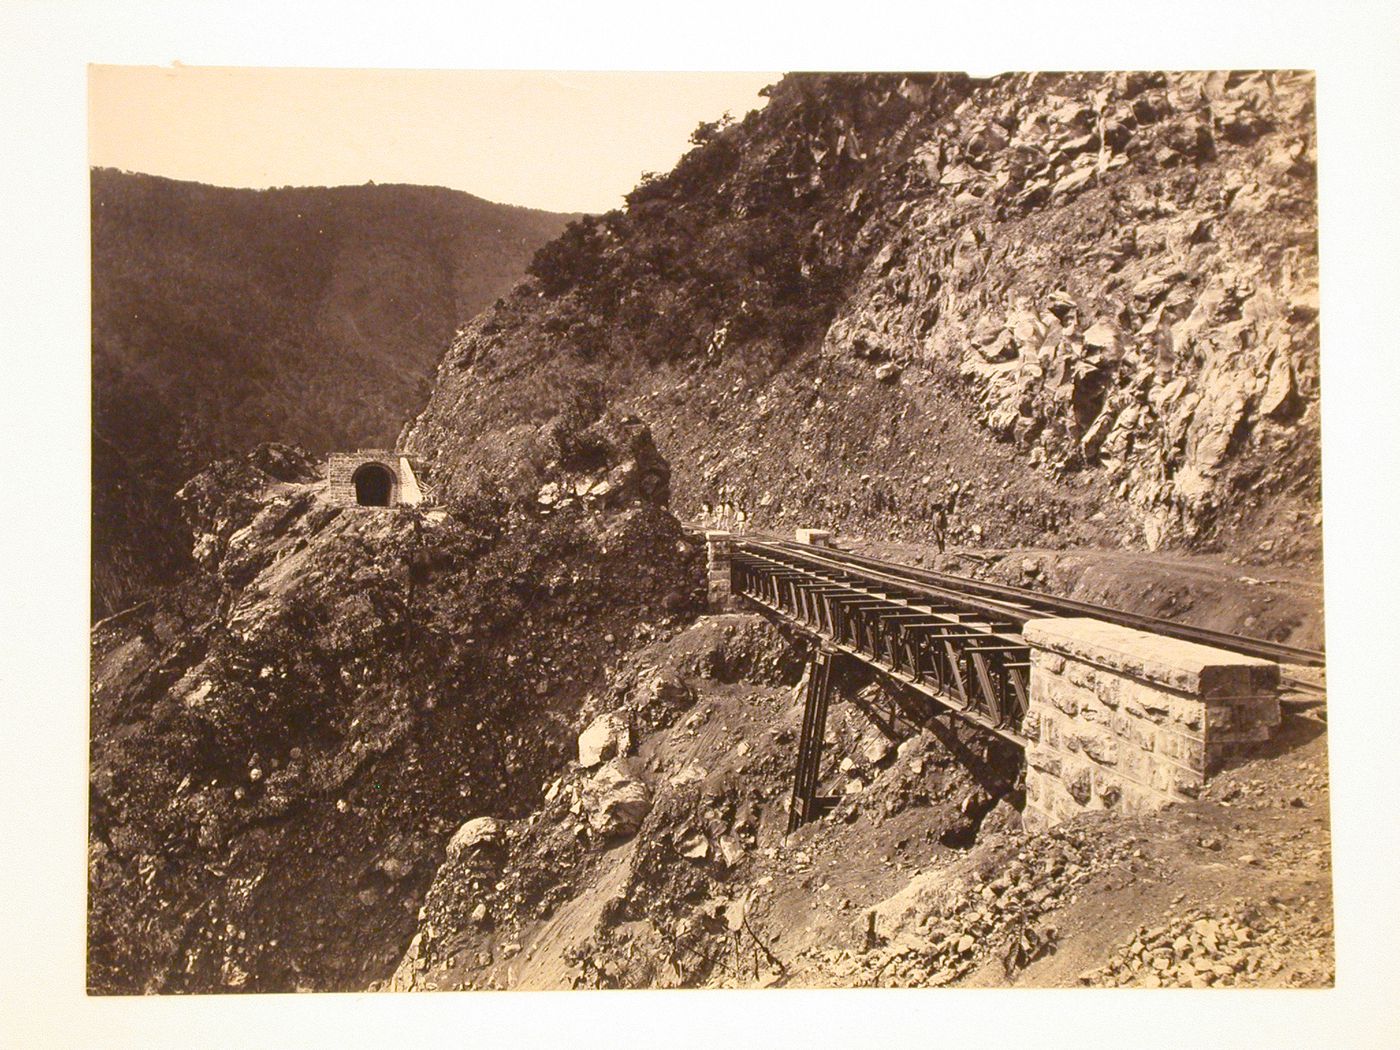 View of a railroad bridge over the Barranca infiernilla, possibly in the Cumbres de Maltrata, with a group of men and a railroad tunnel entrance in the background, Veracruz-Llave, Mexico